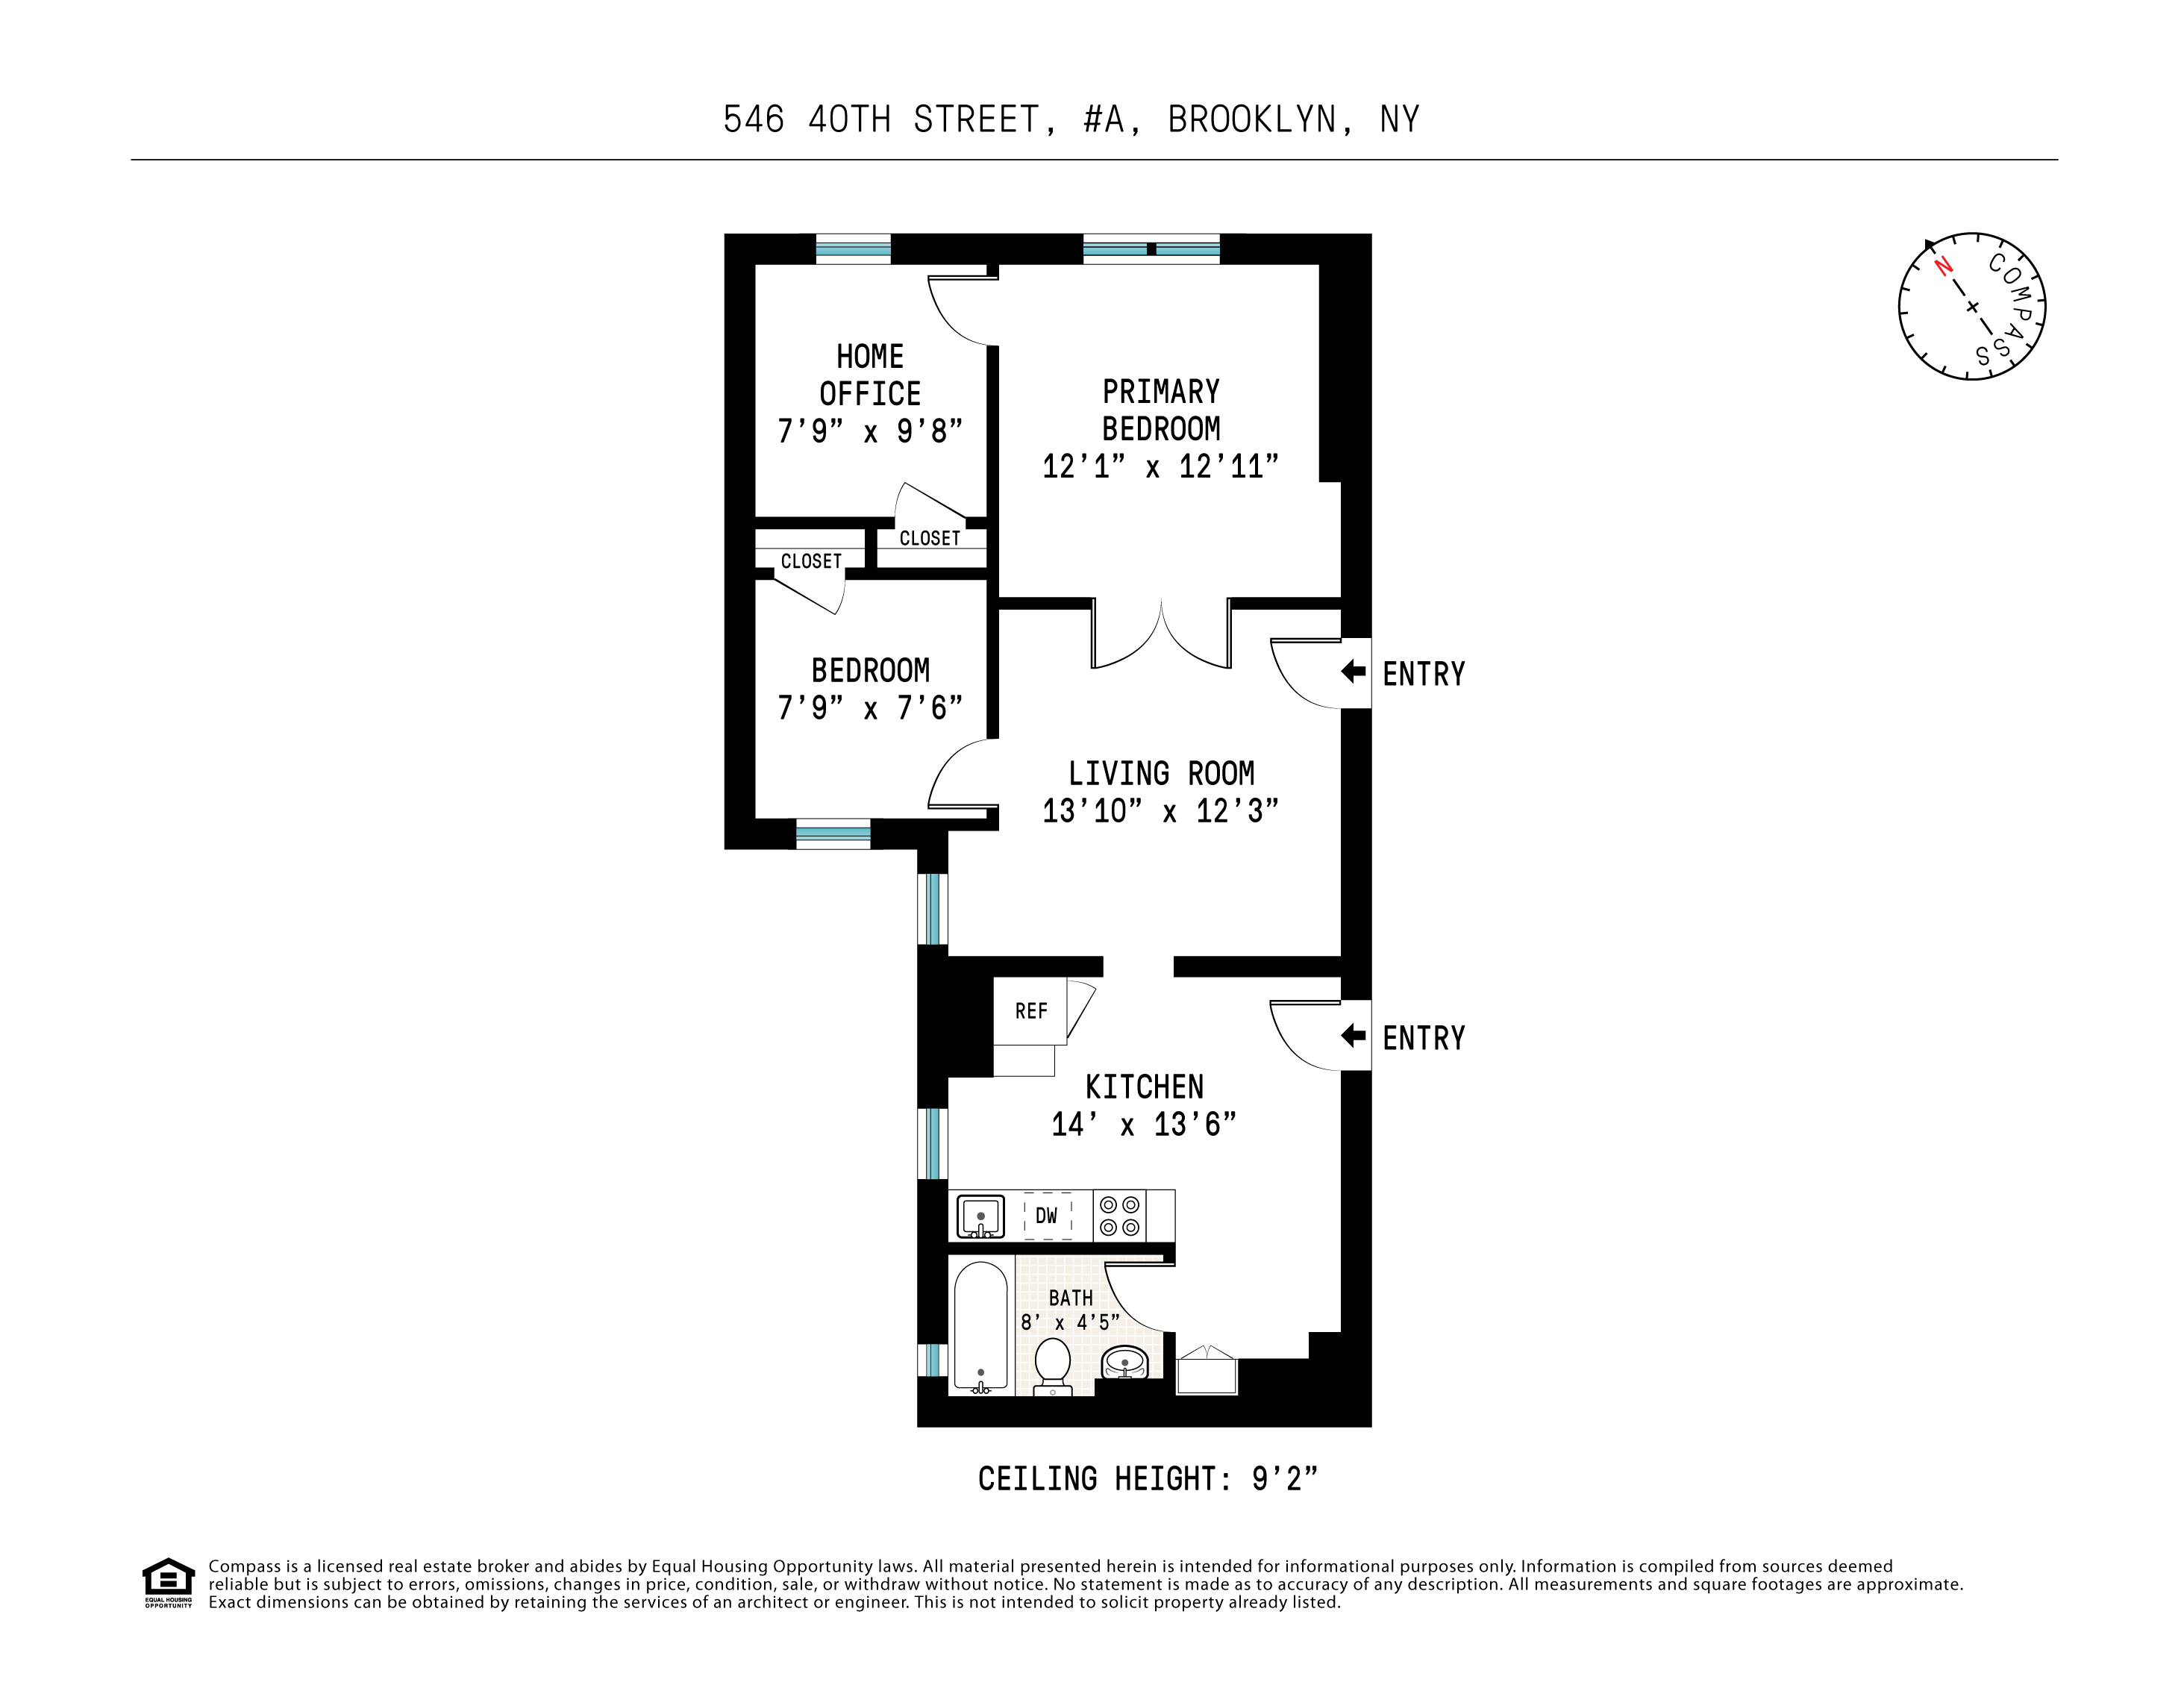 Floorplan for 546 40th Street, A